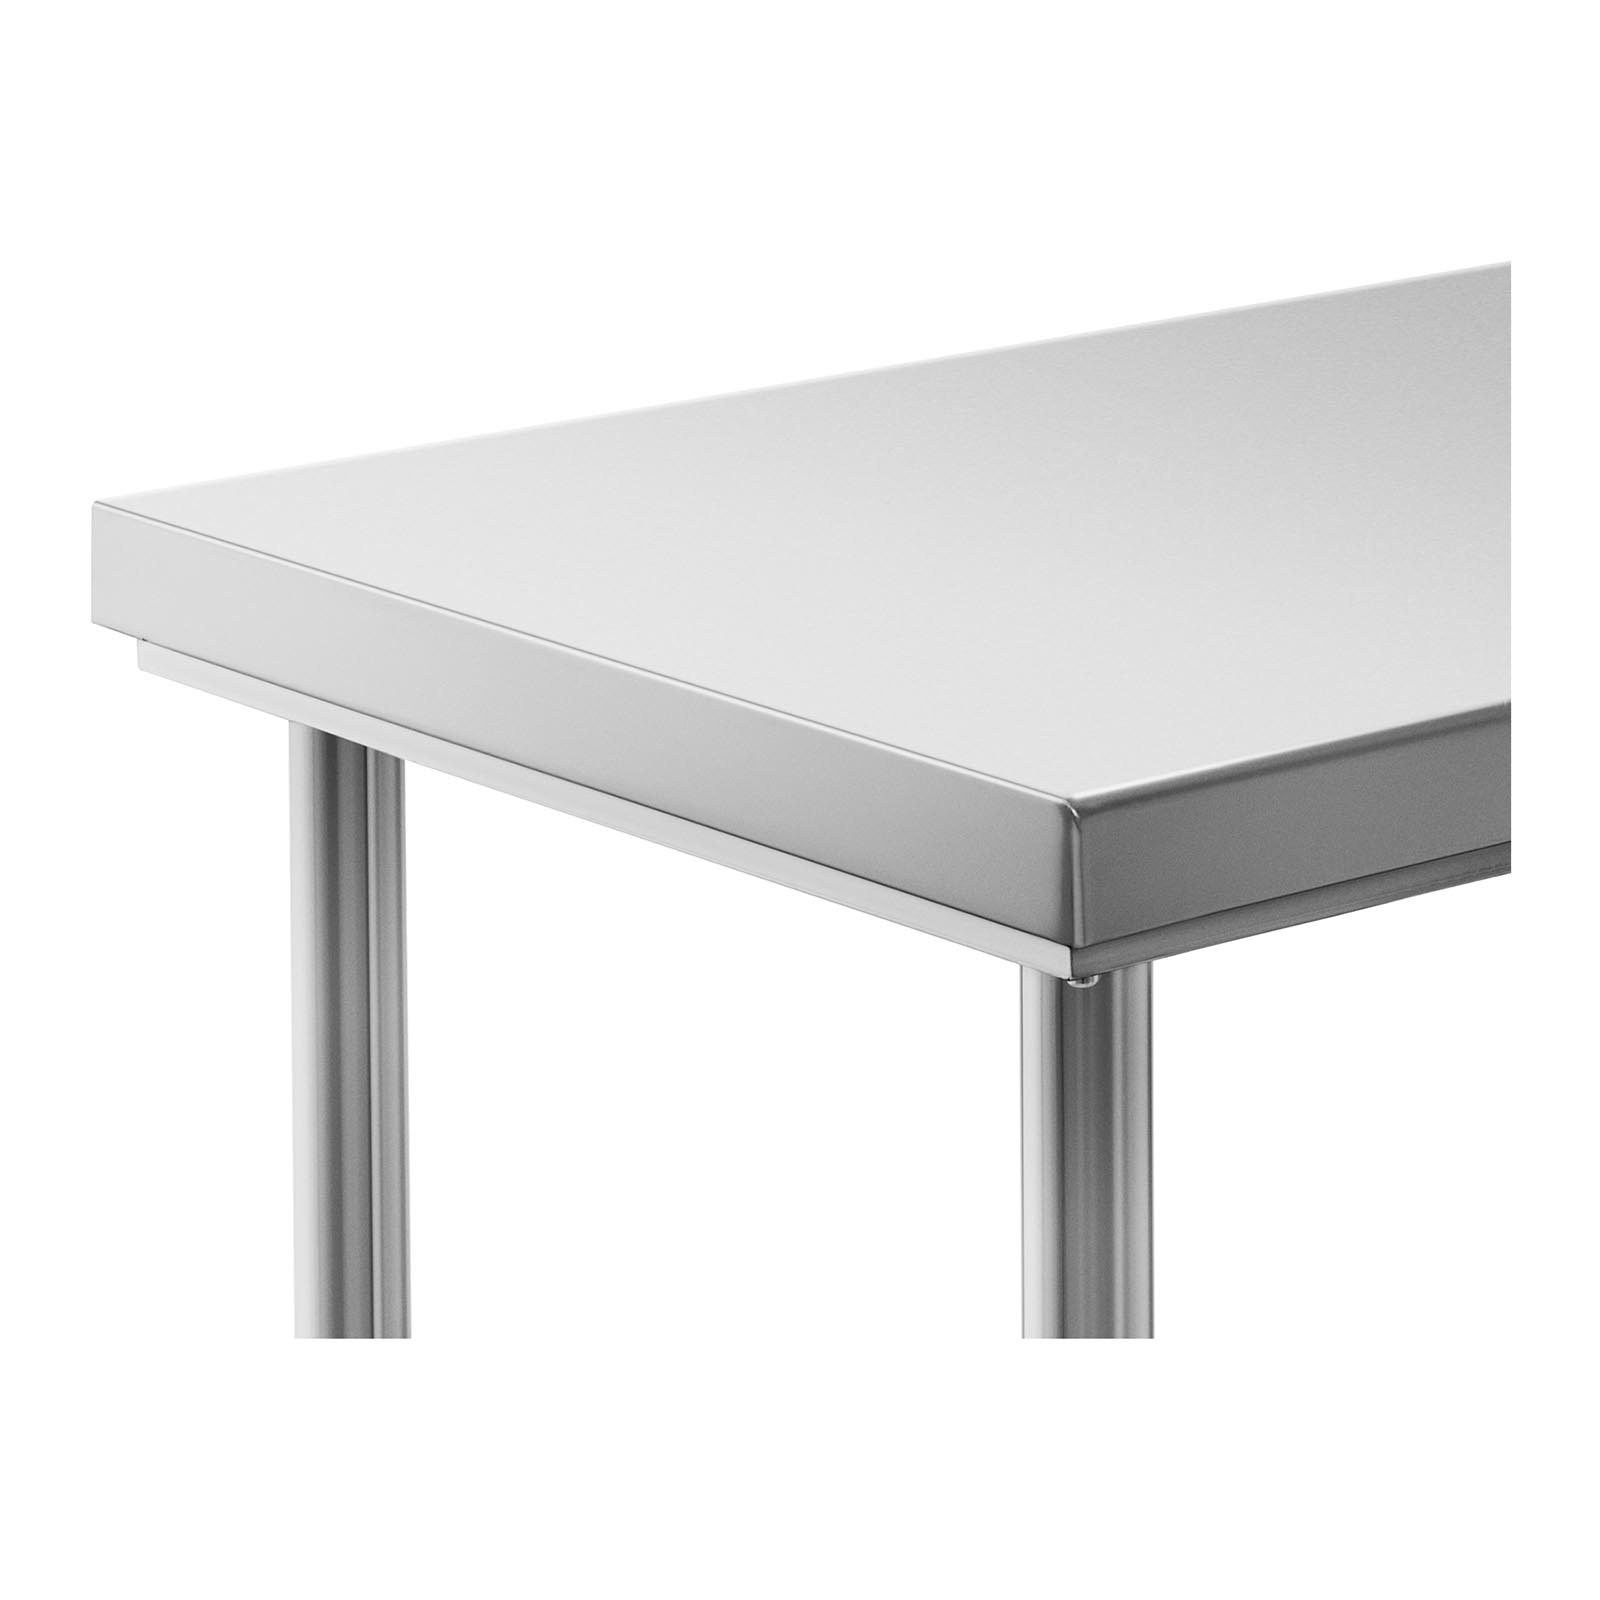 Stainless Steel Work Table - 120 x 70 cm - 143 kg capacity